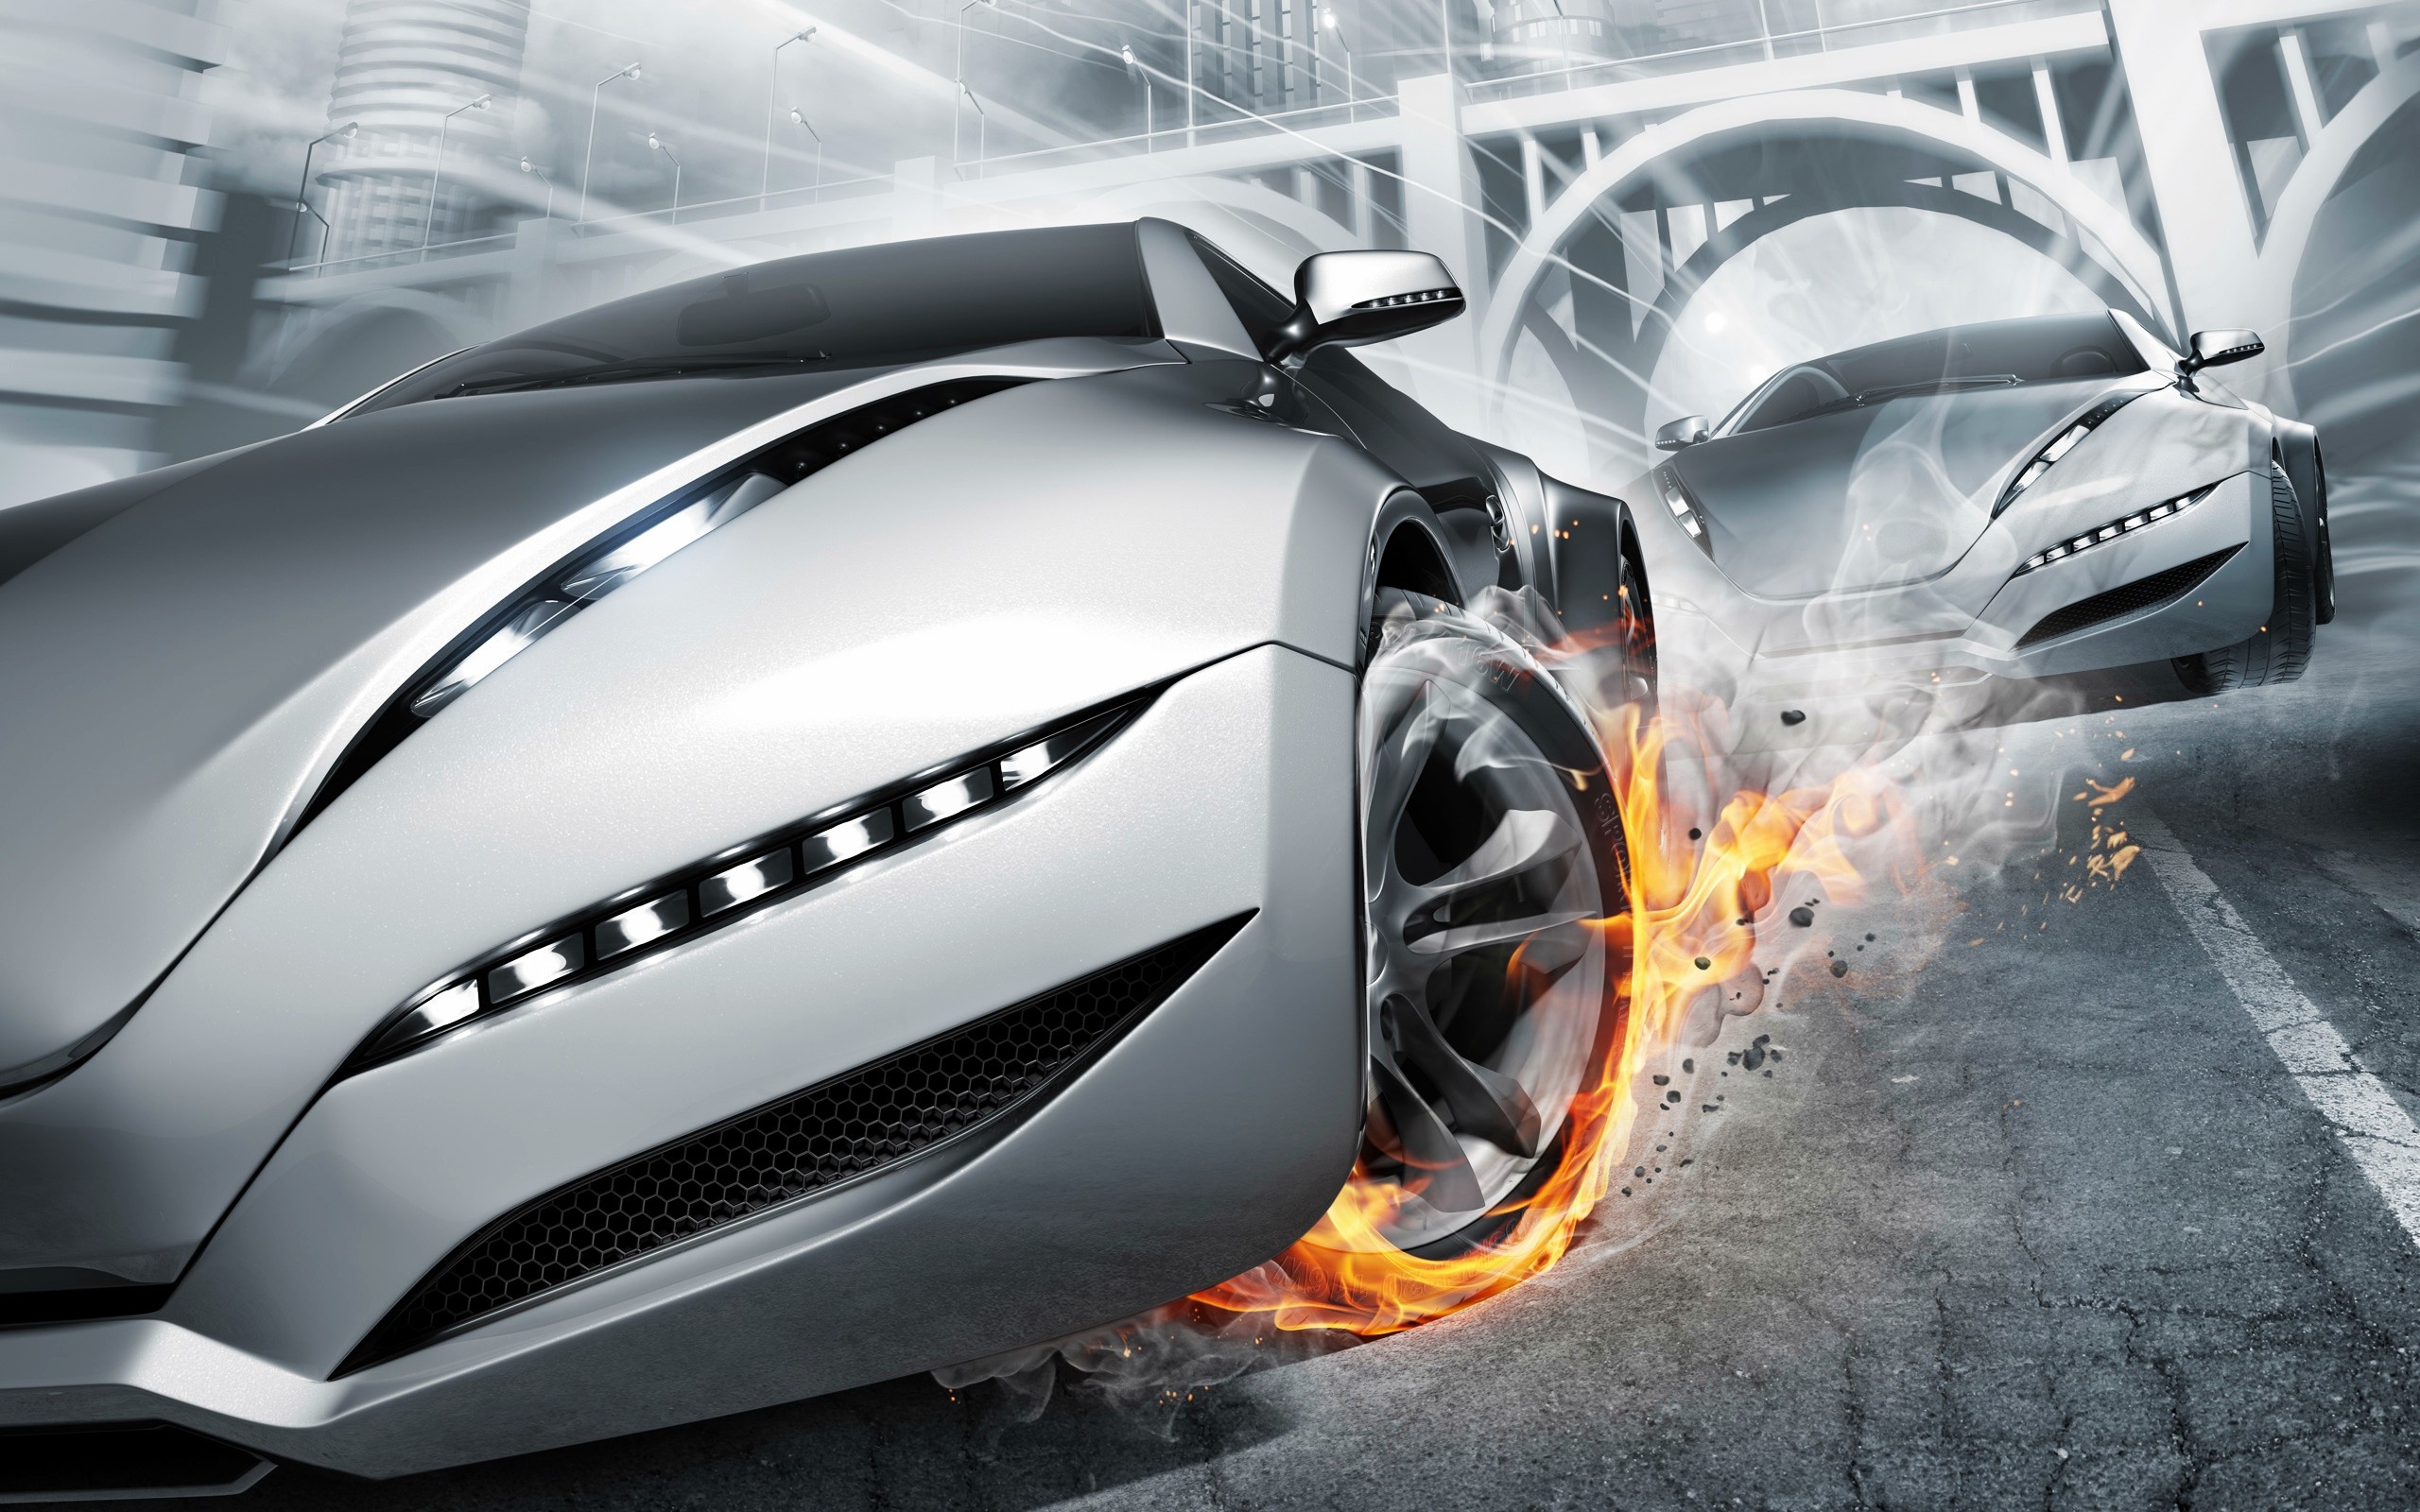 Ultimate Race - Fast And Furious 7 Hd Wallpaper Car - 2560x1600 Wallpaper -  